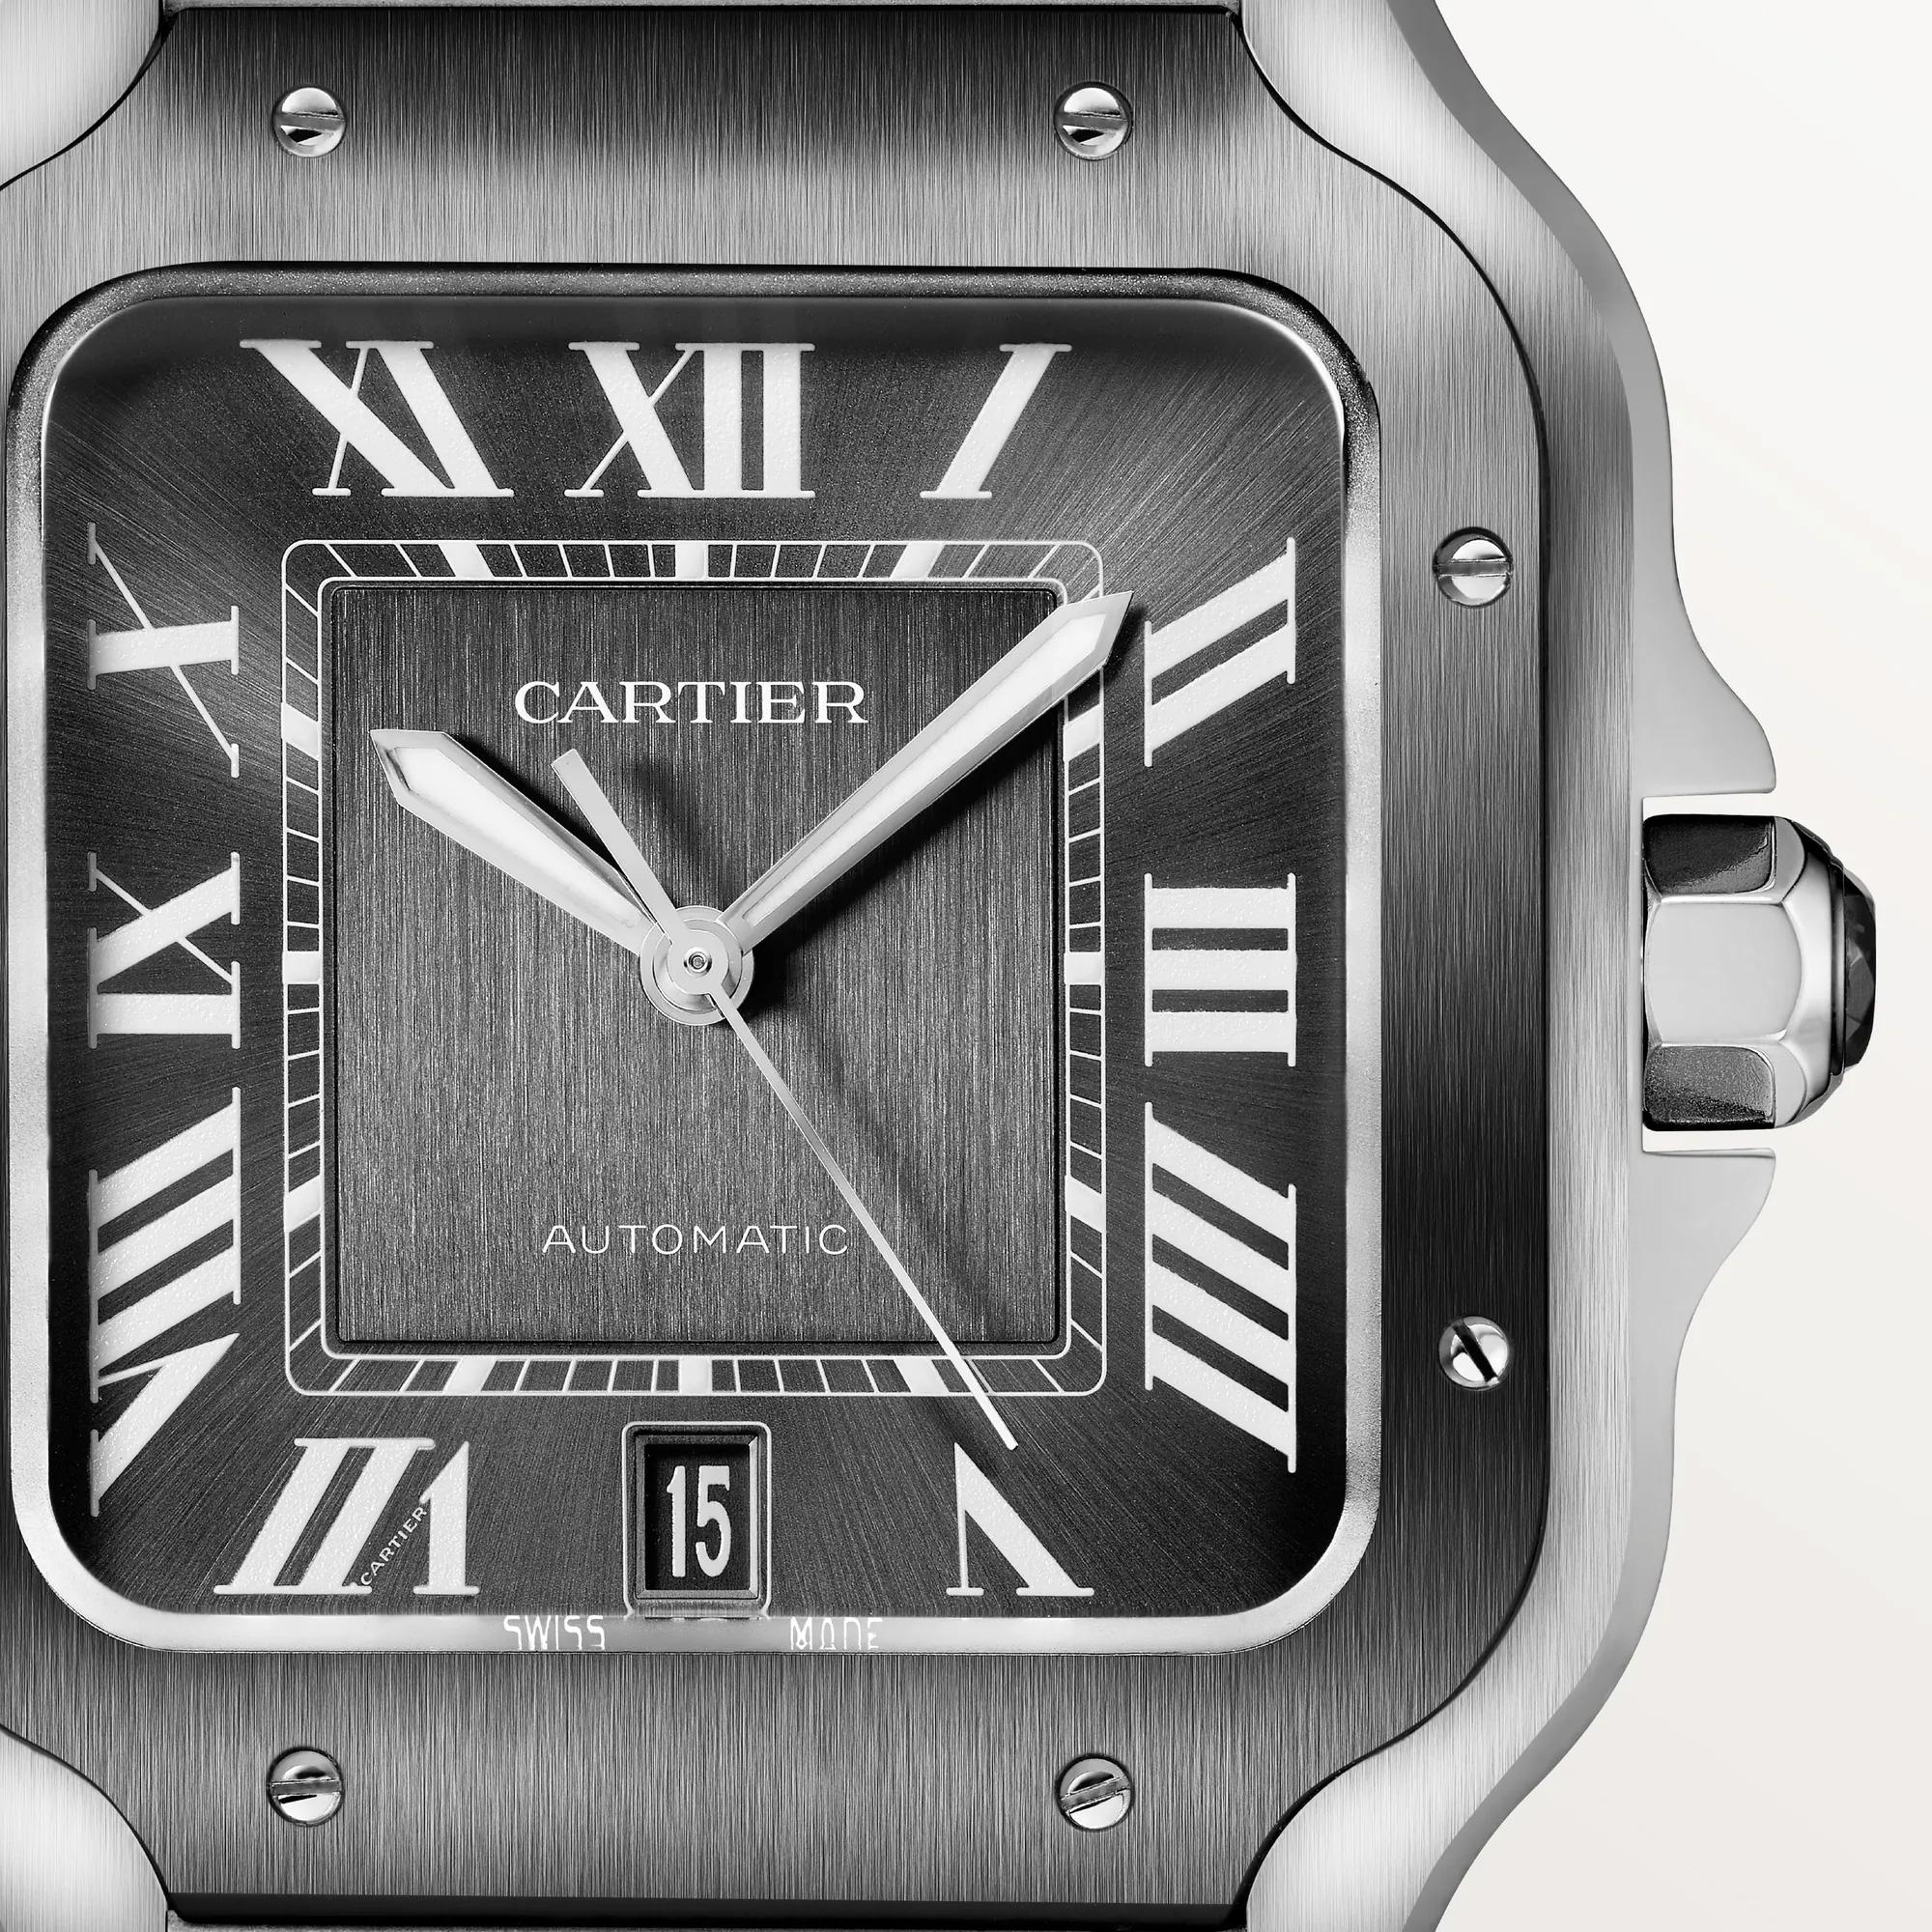 Santos de Cartier Watch with Gray Dial, large model 1